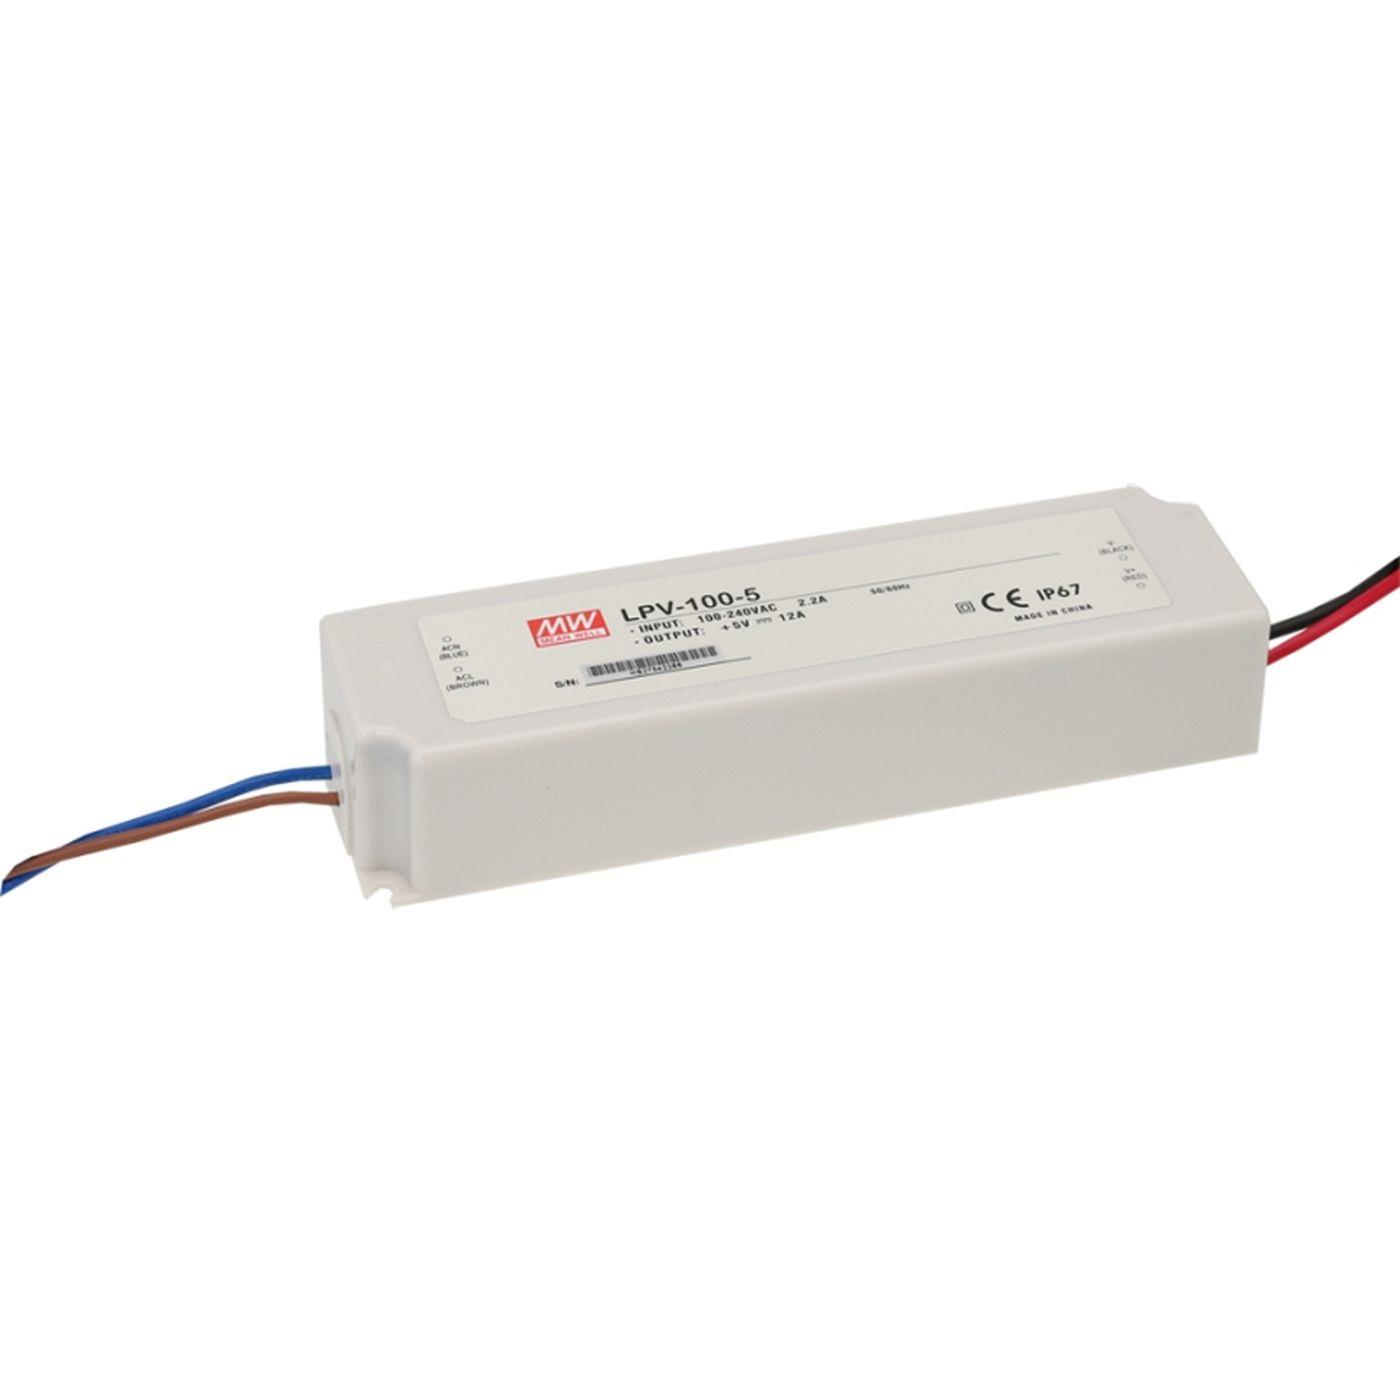 LPV-100-15 100W 15V 6,7A LED power supply Transformer Driver IP67